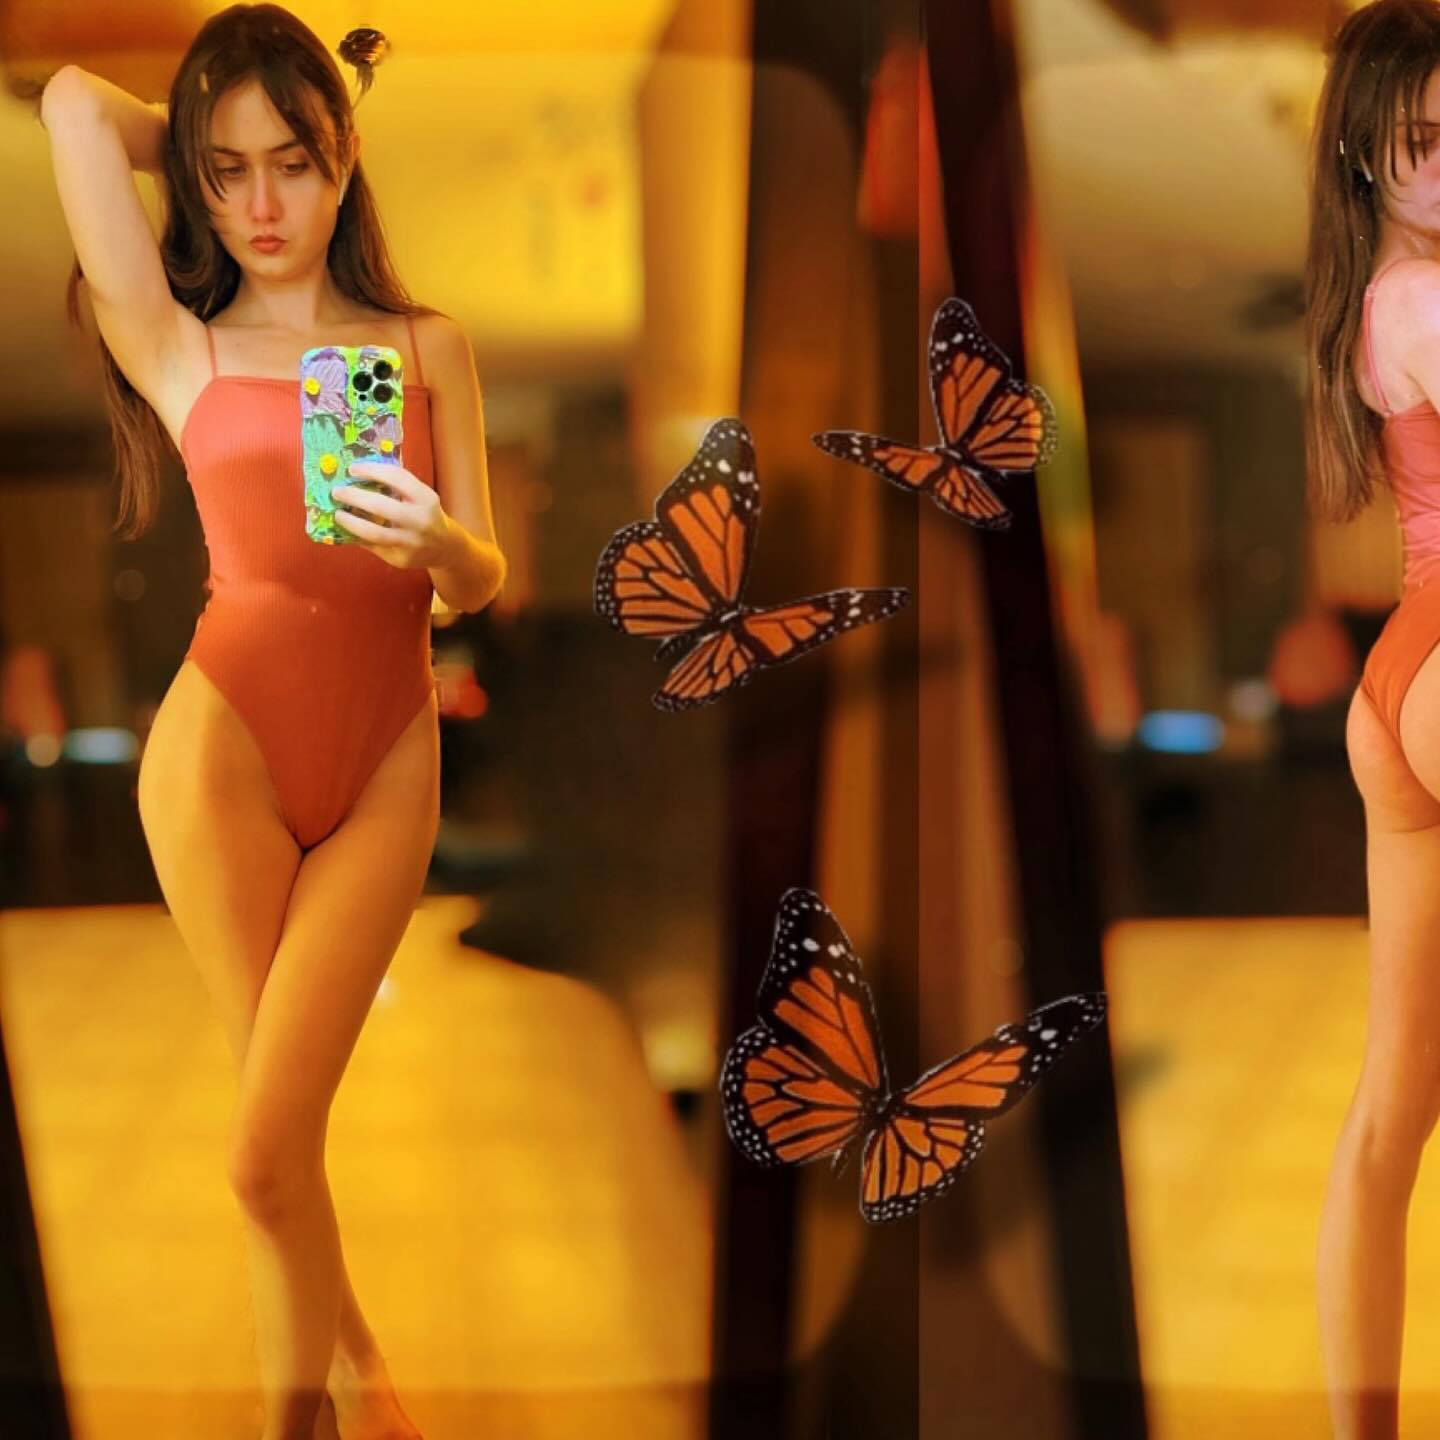 oh to be someone’s daydream 🧡
•
•
•
•
•
#vibes #pretty #selfie #mirrorselfie #pretty #cute #prettyvibes #explore #explorepage #explorepage✨ #lasvegas #vegas #follow #only #baddie #daydream #edit #edits #orange #butterfly #butterflies #picsart